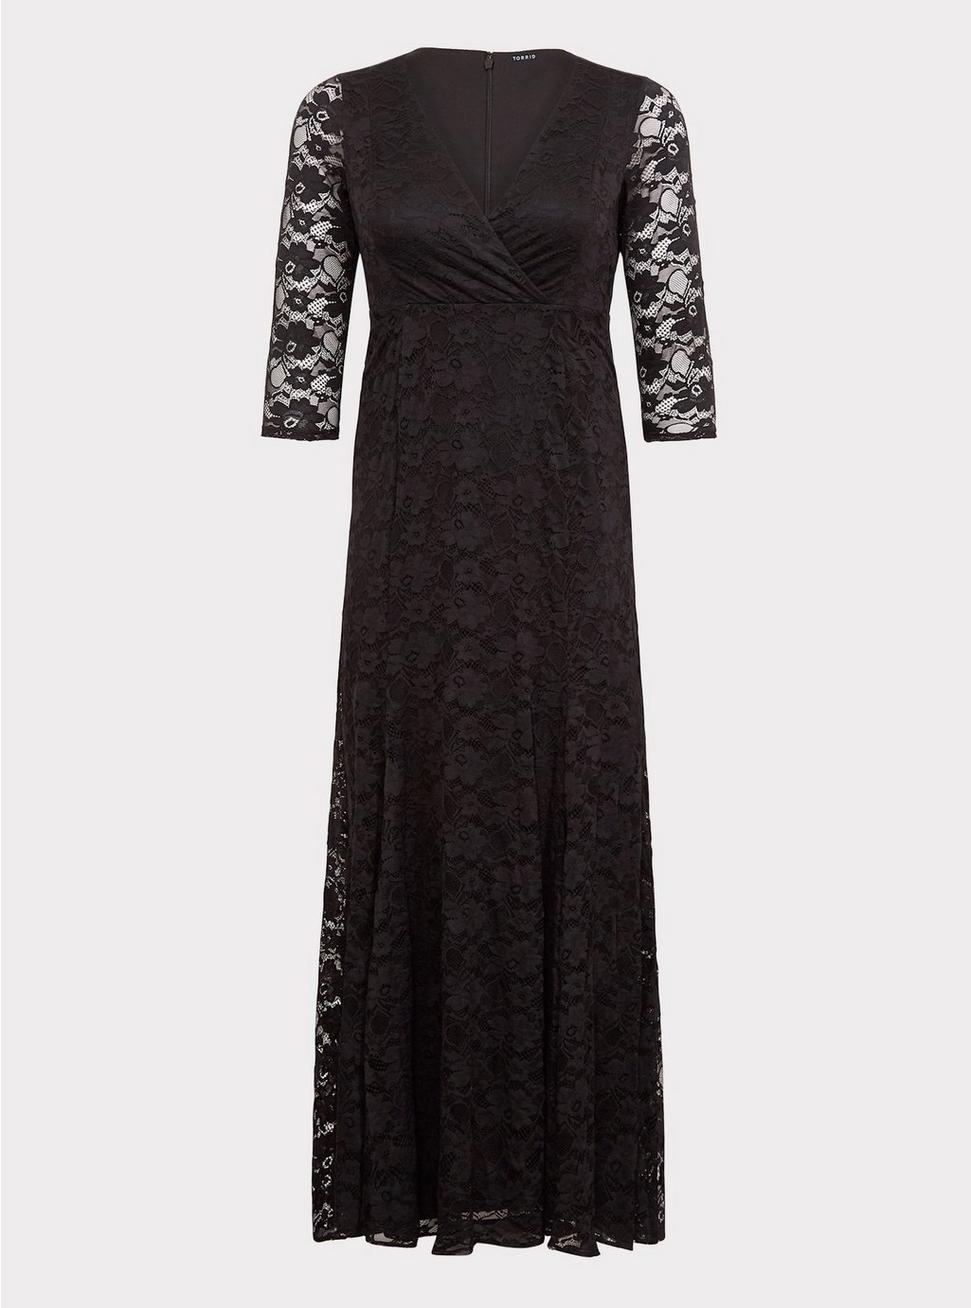 Plus Size - Special Occasion Black Lace Gown - Torrid